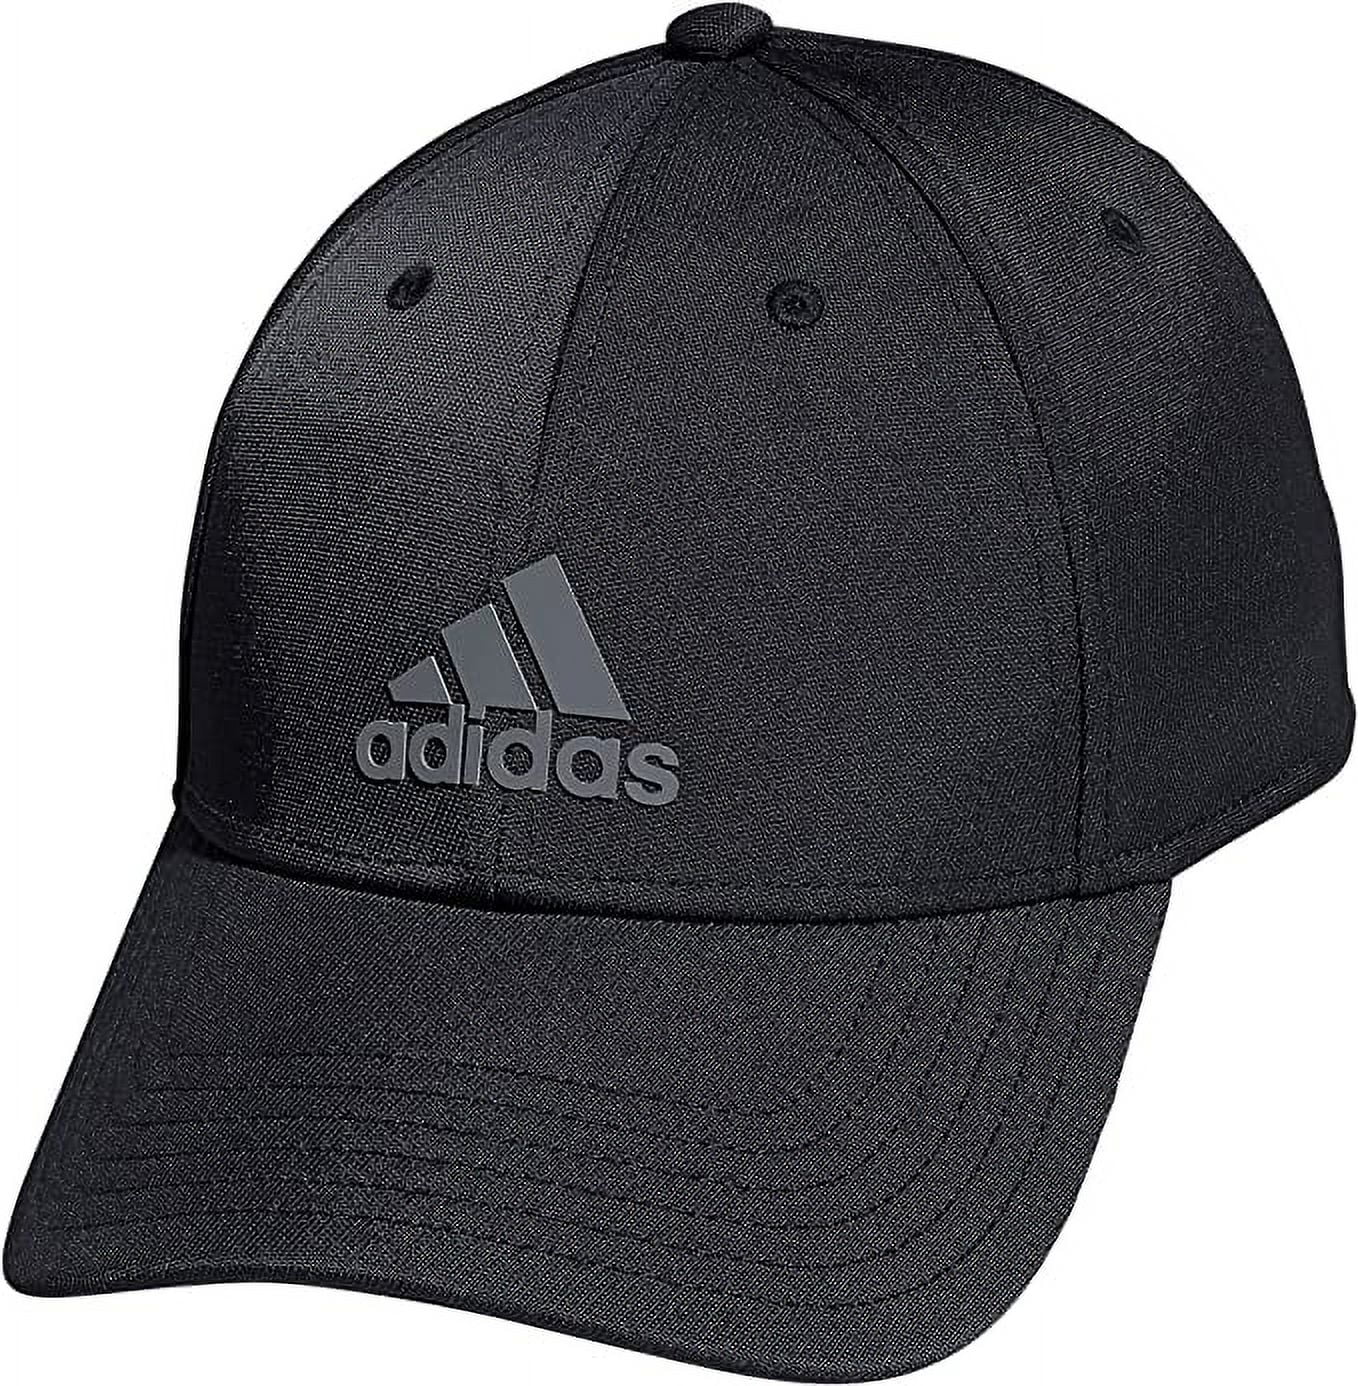 Louisville Cardinals Adidas AEROREADY Fitted Hat Unisex Black/Dark Gray New MD/LG